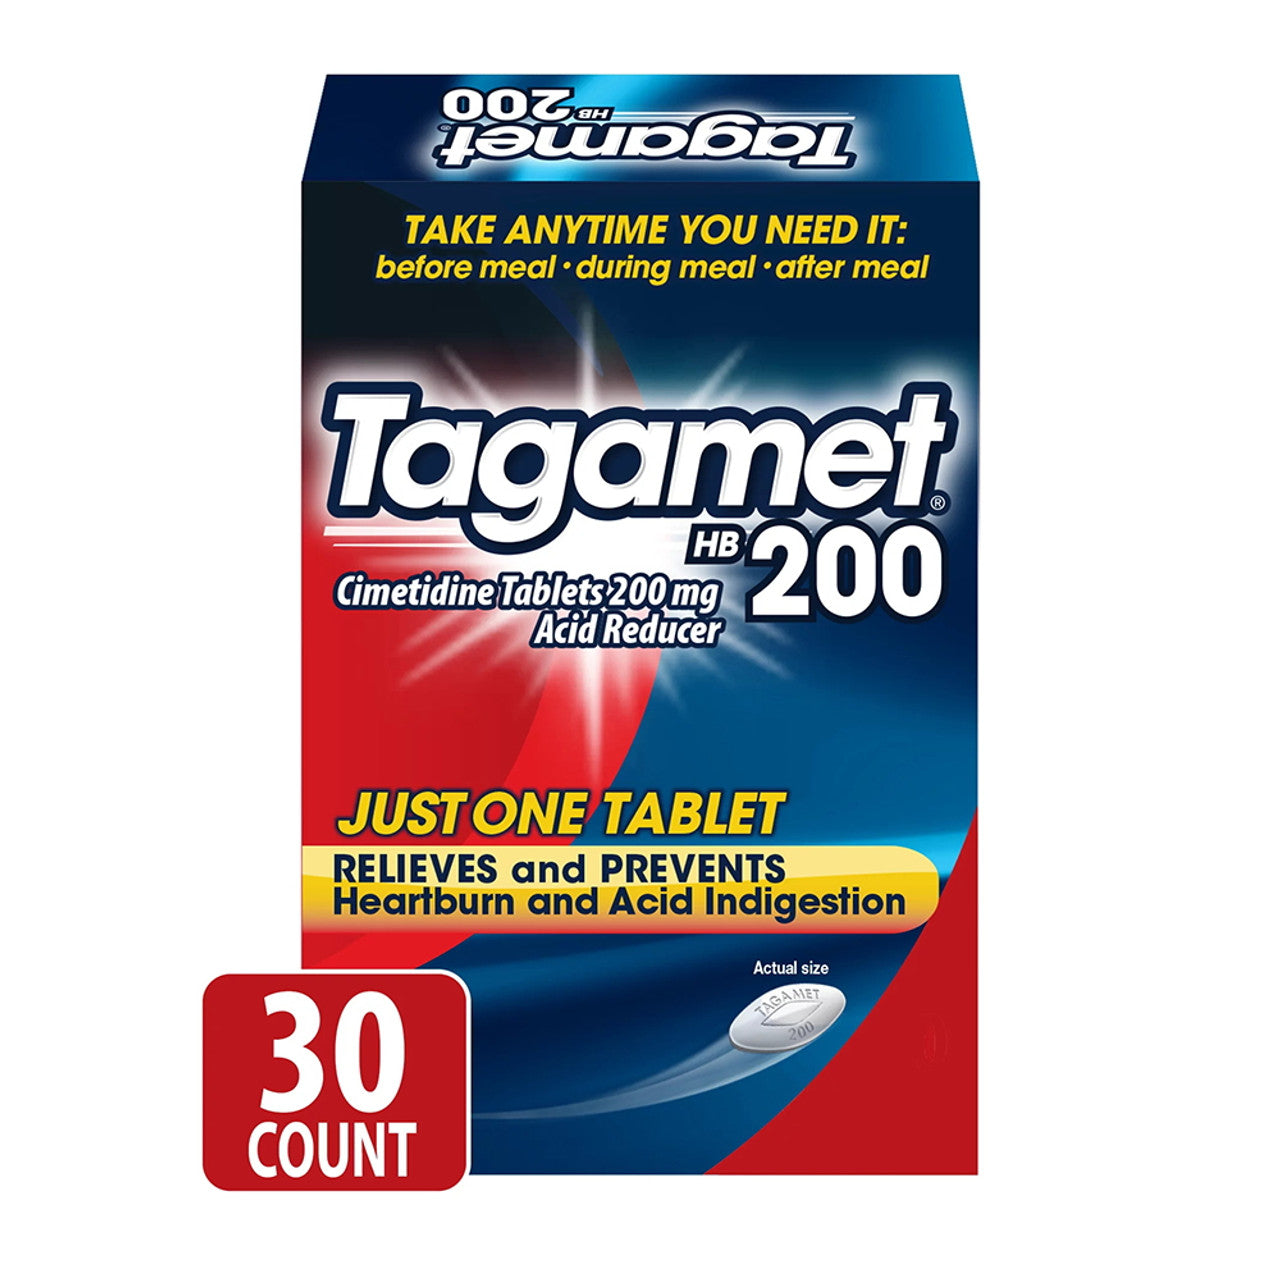 Tagamet HB 200 mg Cimetidine Tablets, Acid Reducer and Heartburn Relief, 30 Ea